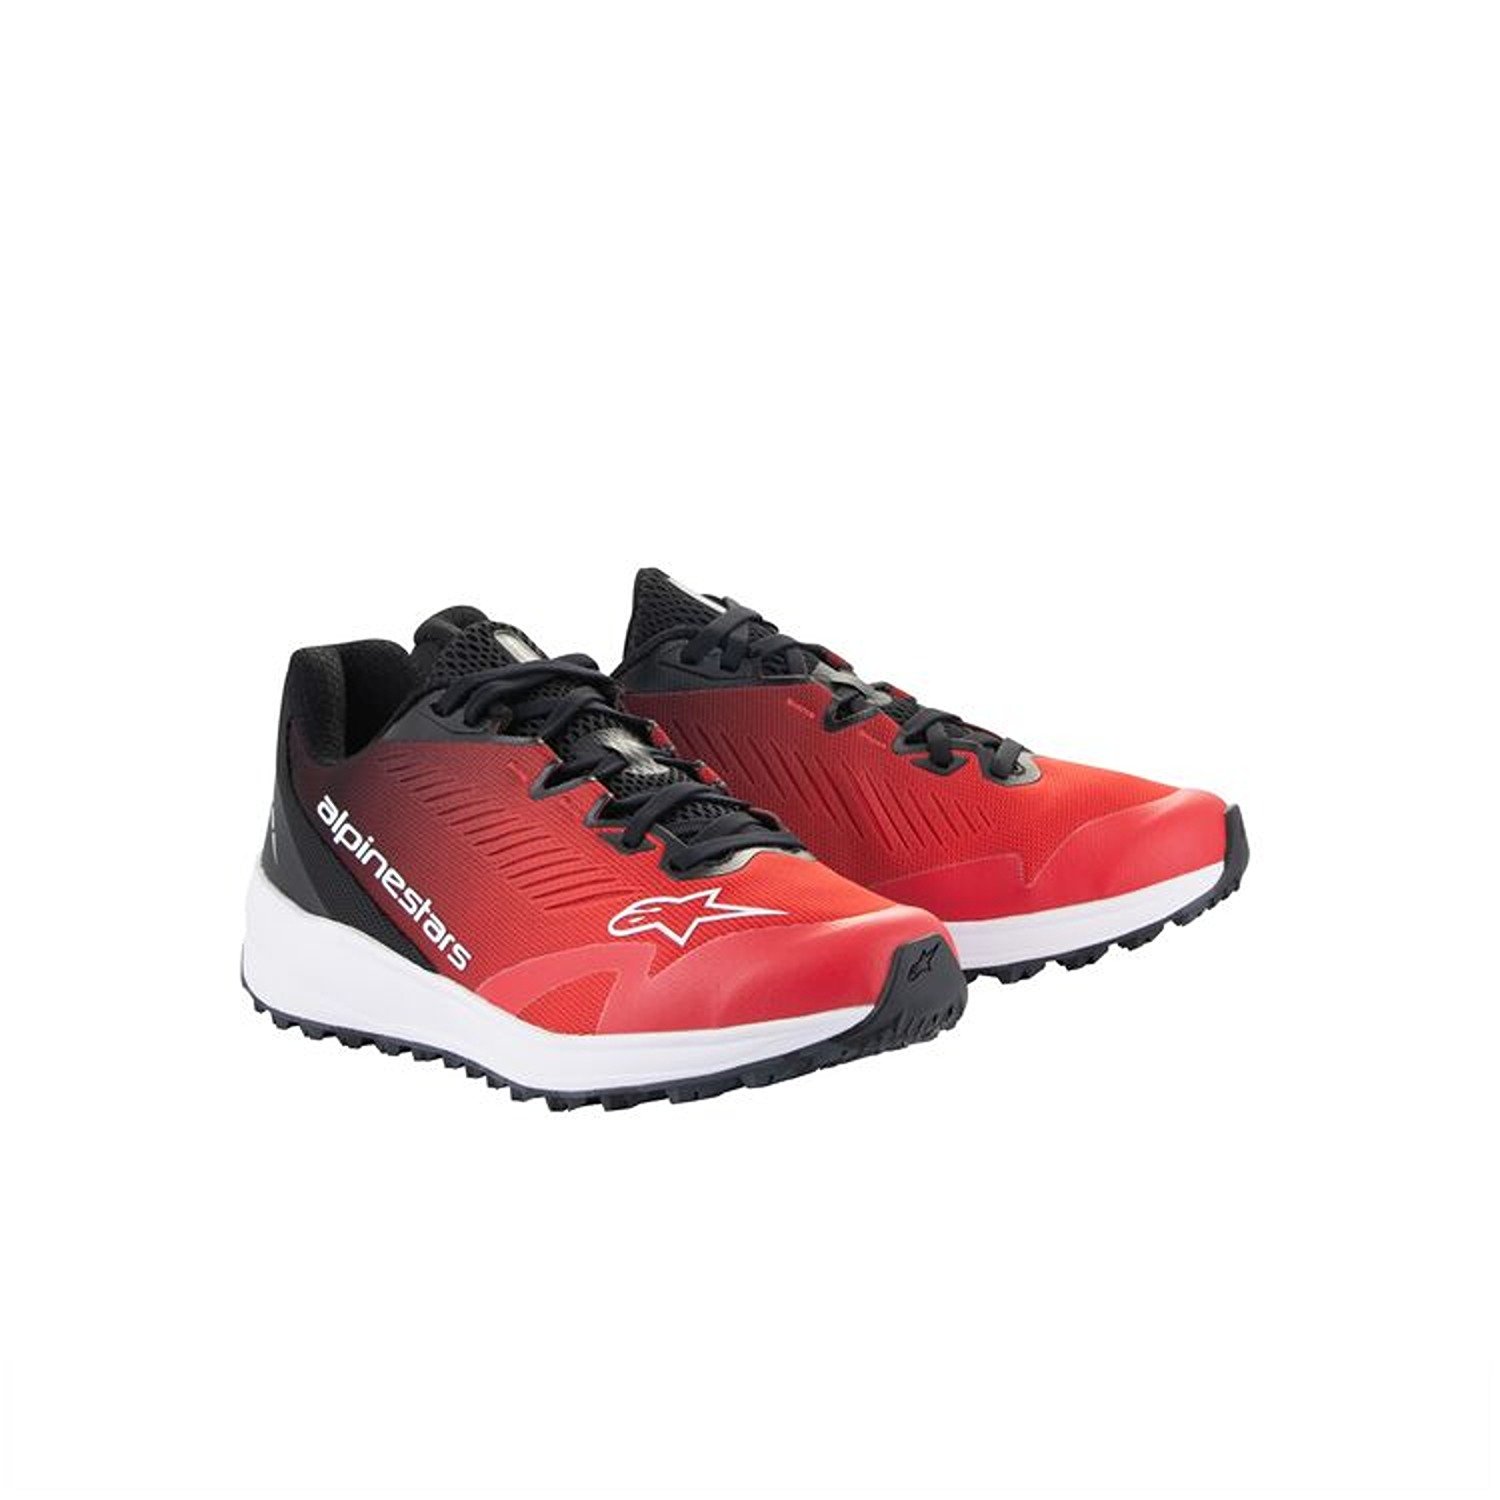 Image of Alpinestars Meta Road V2 Shoes Red Black White Size US 5 ID 8059347381398